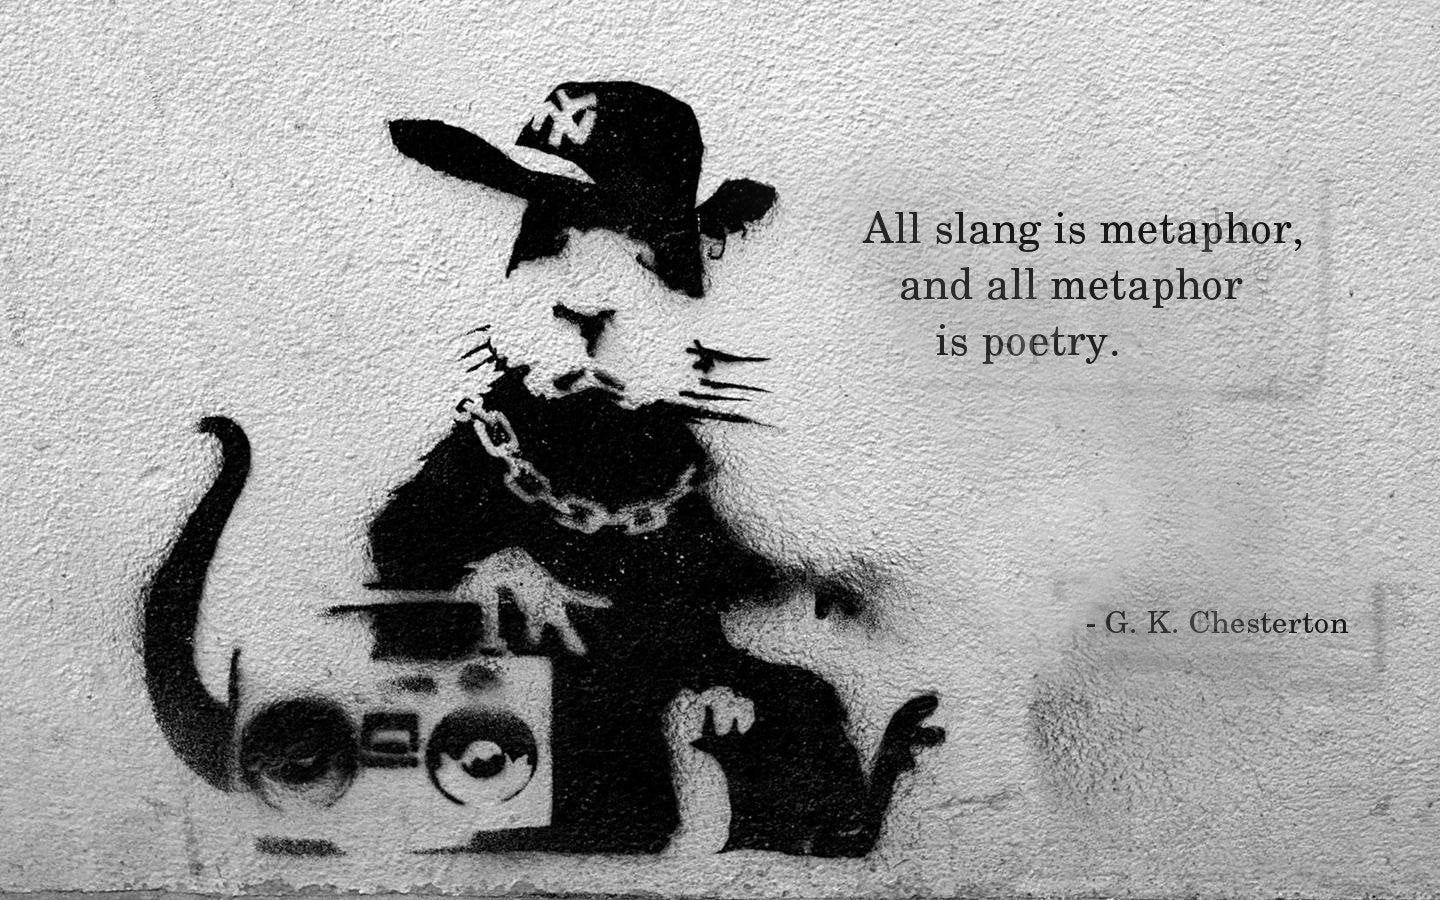 All slang is metaphor, and all metaphor is poetry. K